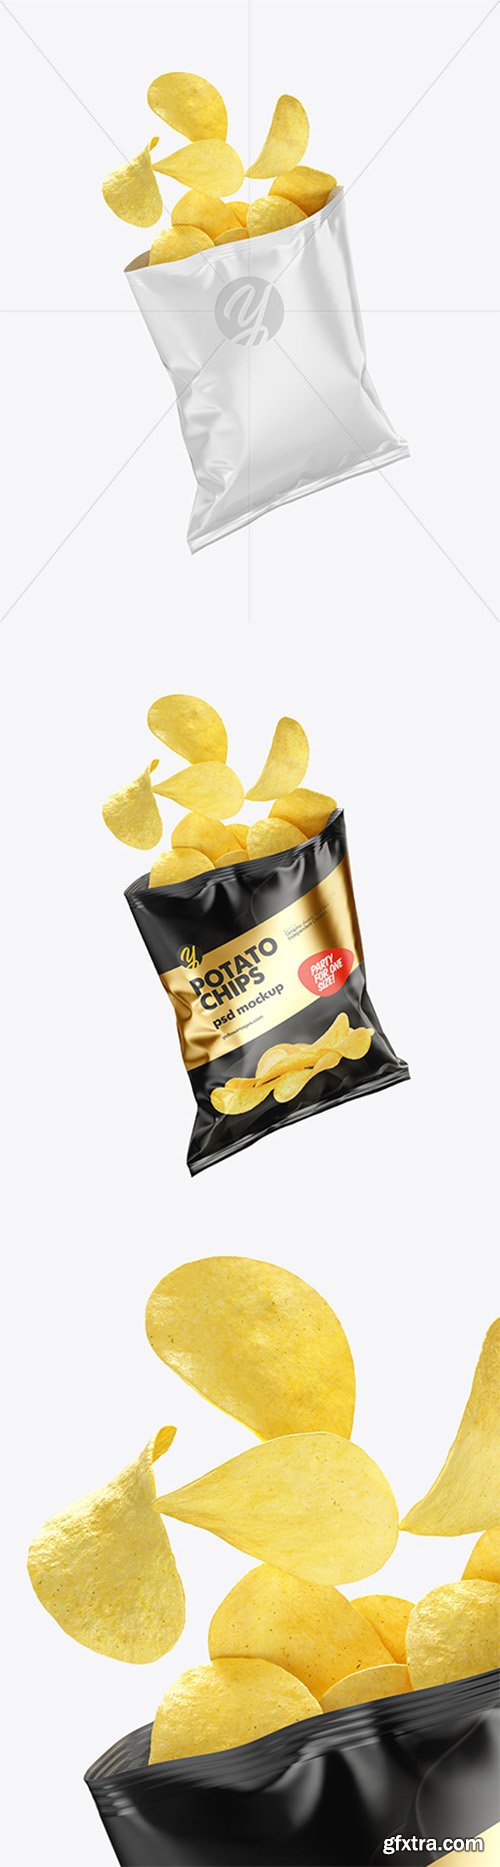 Glossy Bag w/ Chips Mockup 51784